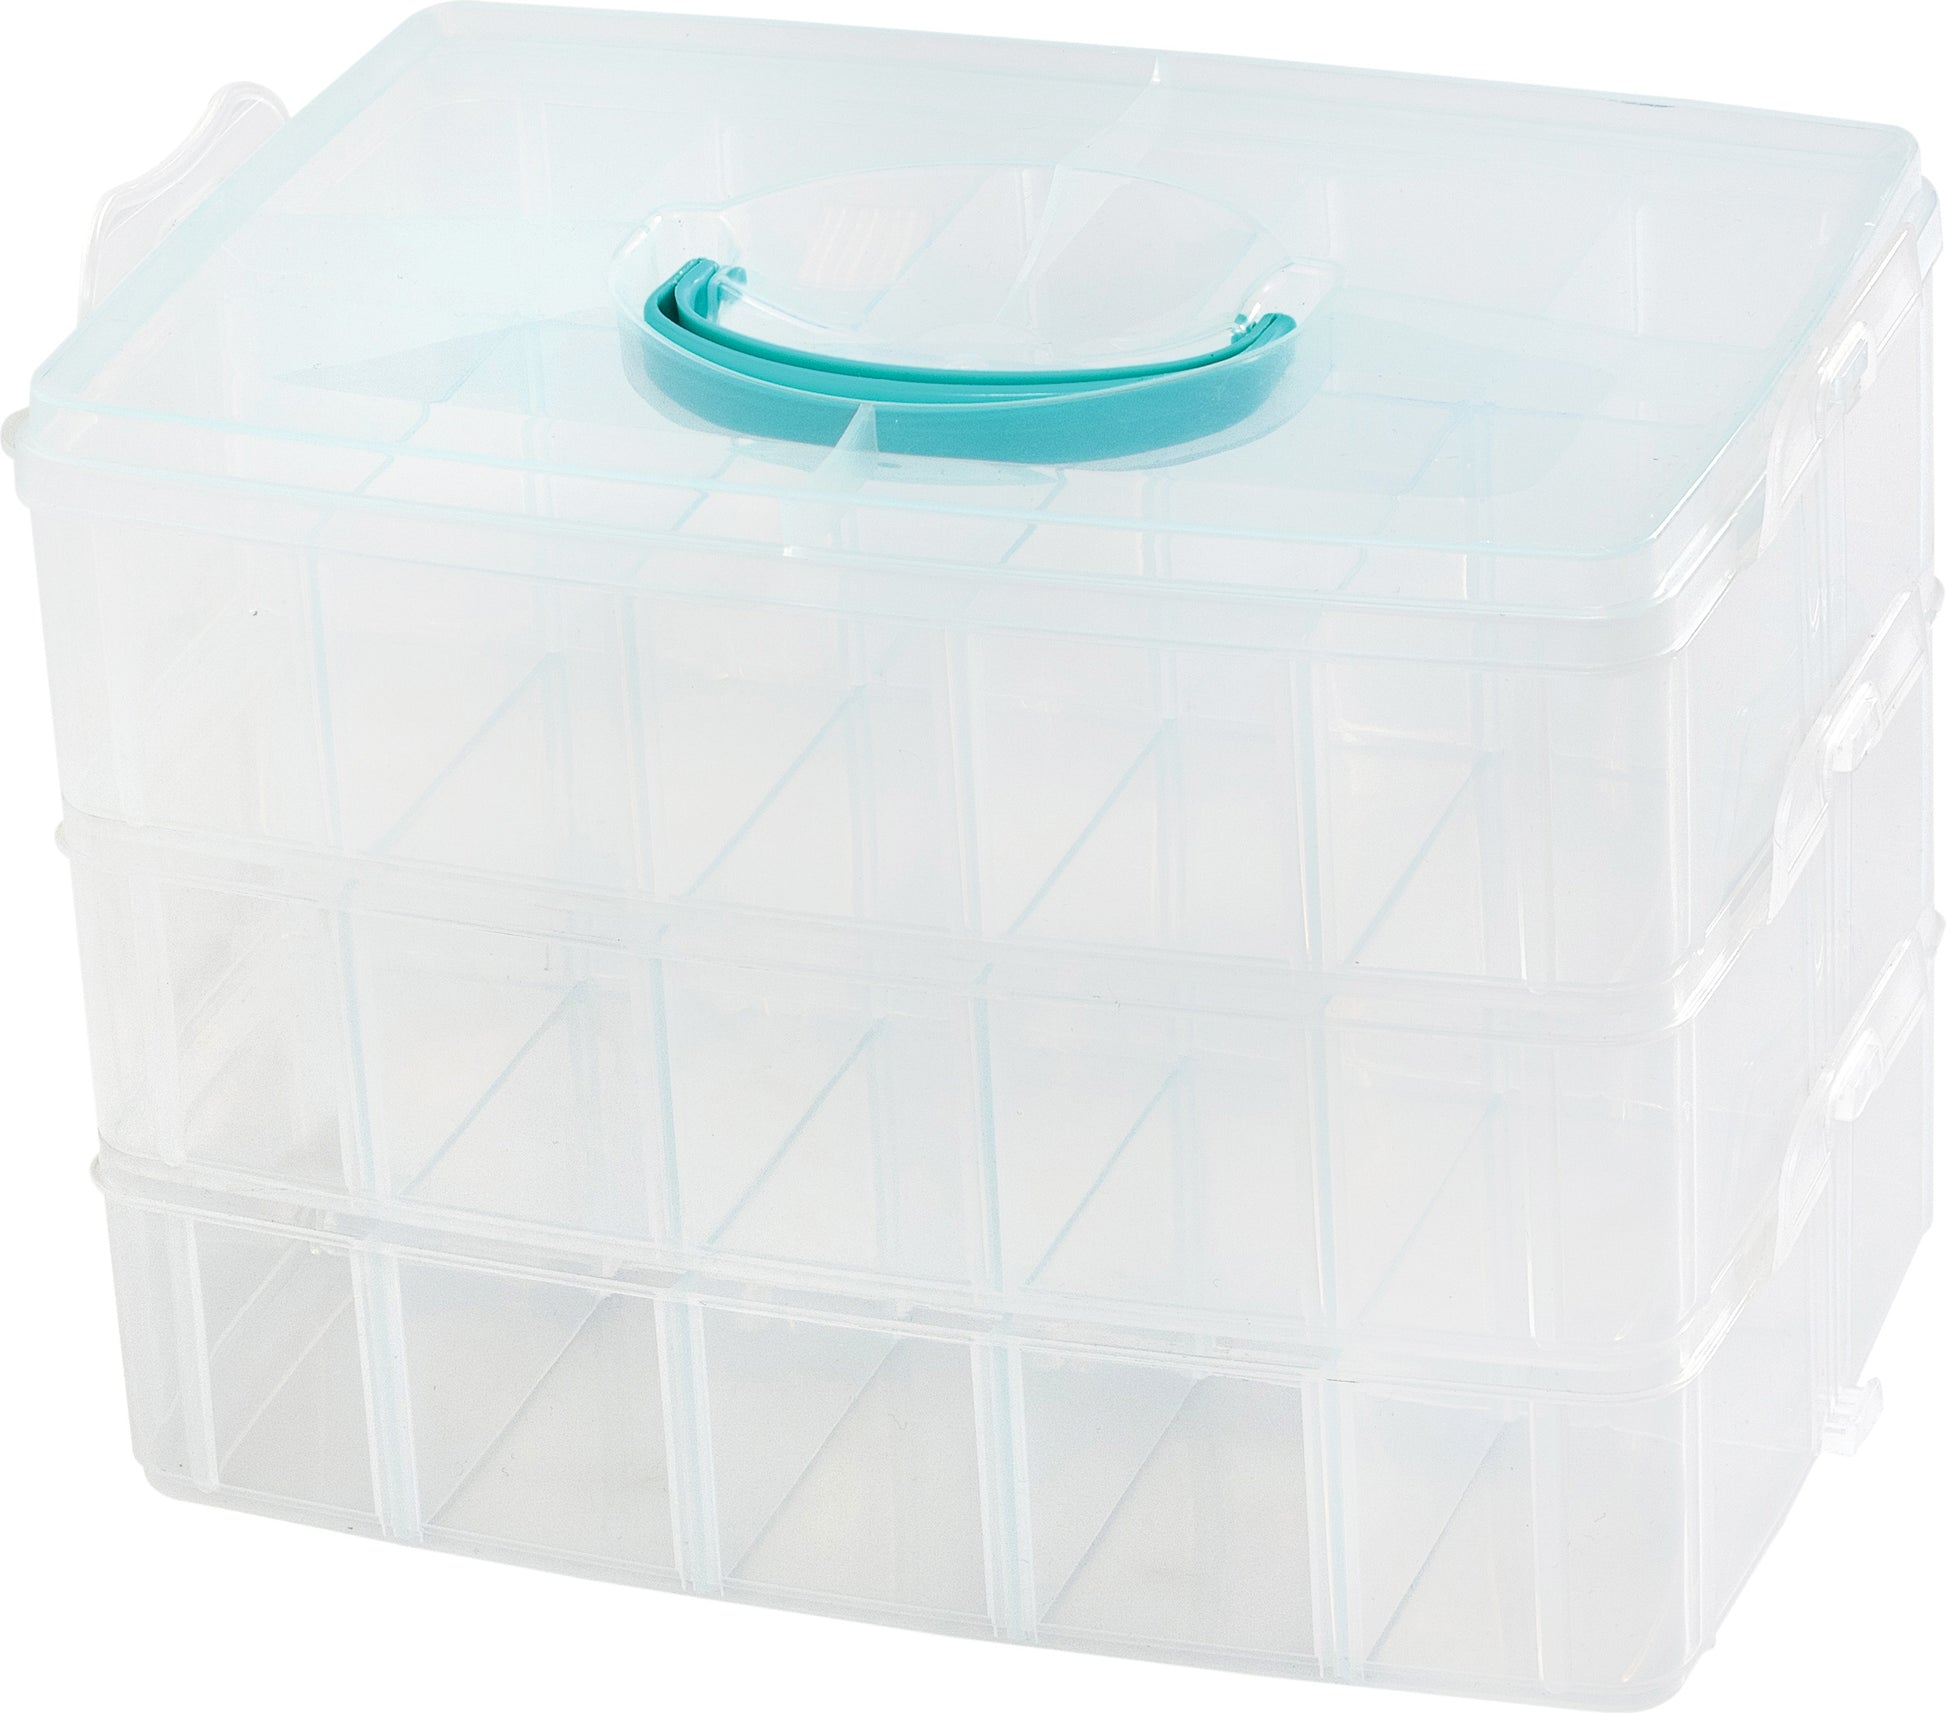  Creative Hobbies® Clear Polypropylene Mini Storage Box